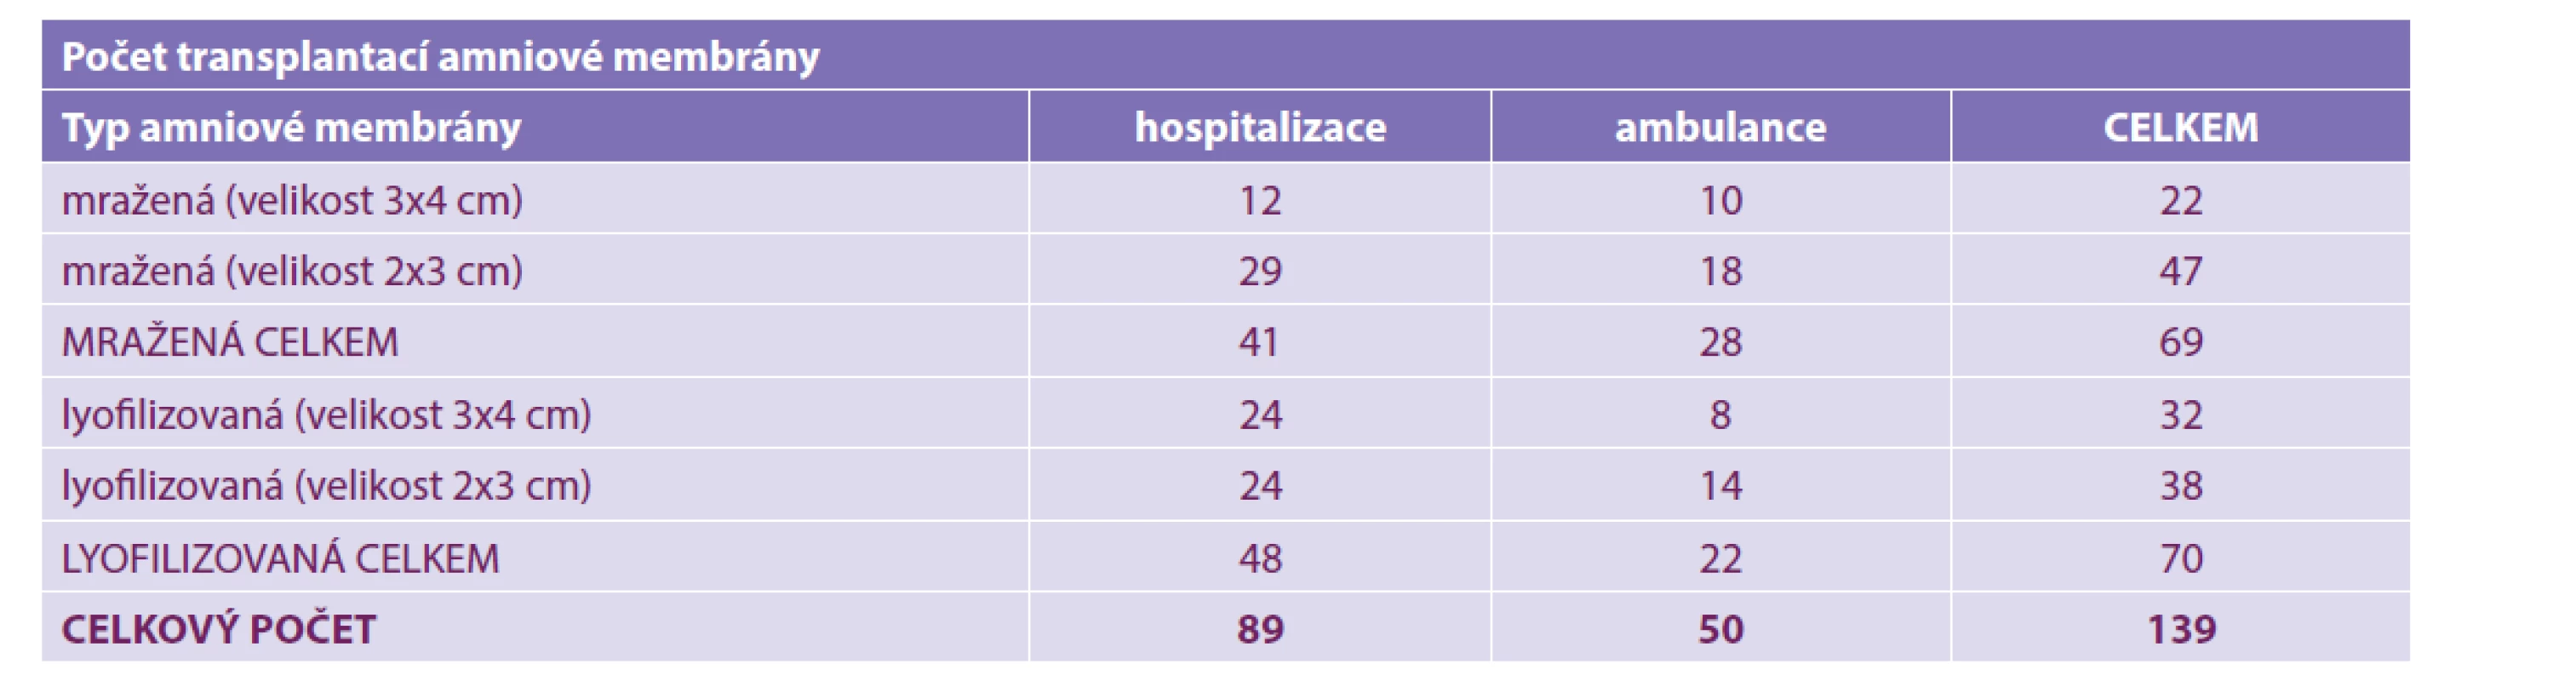 Počet provedených transplantací amniové membrány na Oční klinice FN Brno v letech 2014-2019